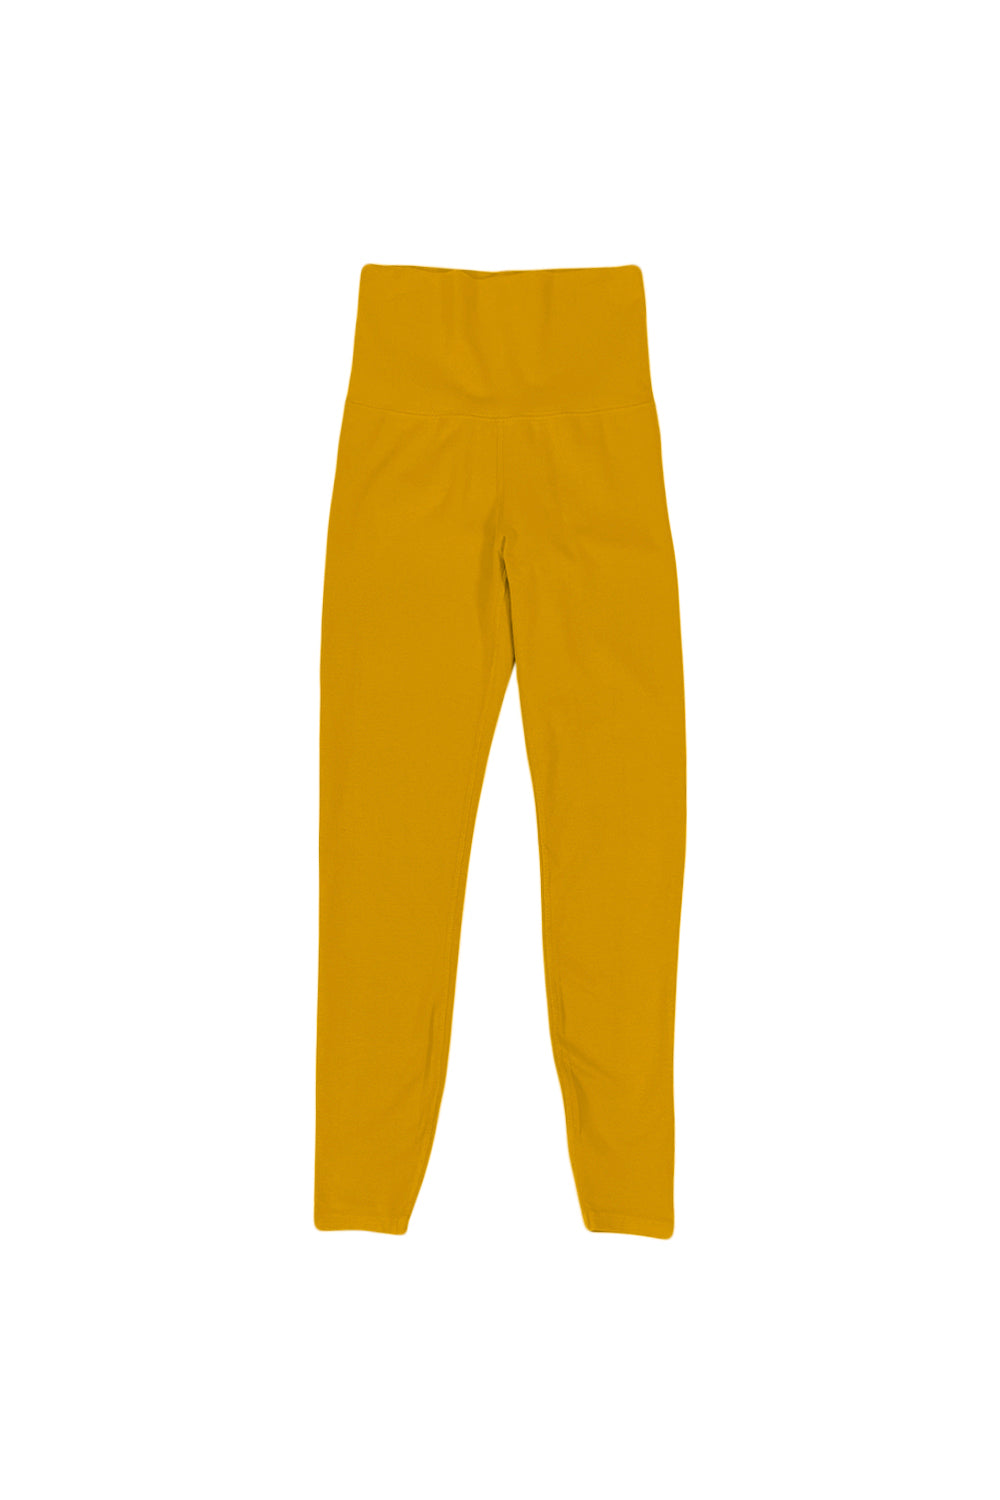 Orosi Leggings - Mid Rise | Jungmaven Hemp Clothing & Accessories / Color: Spicy Mustard